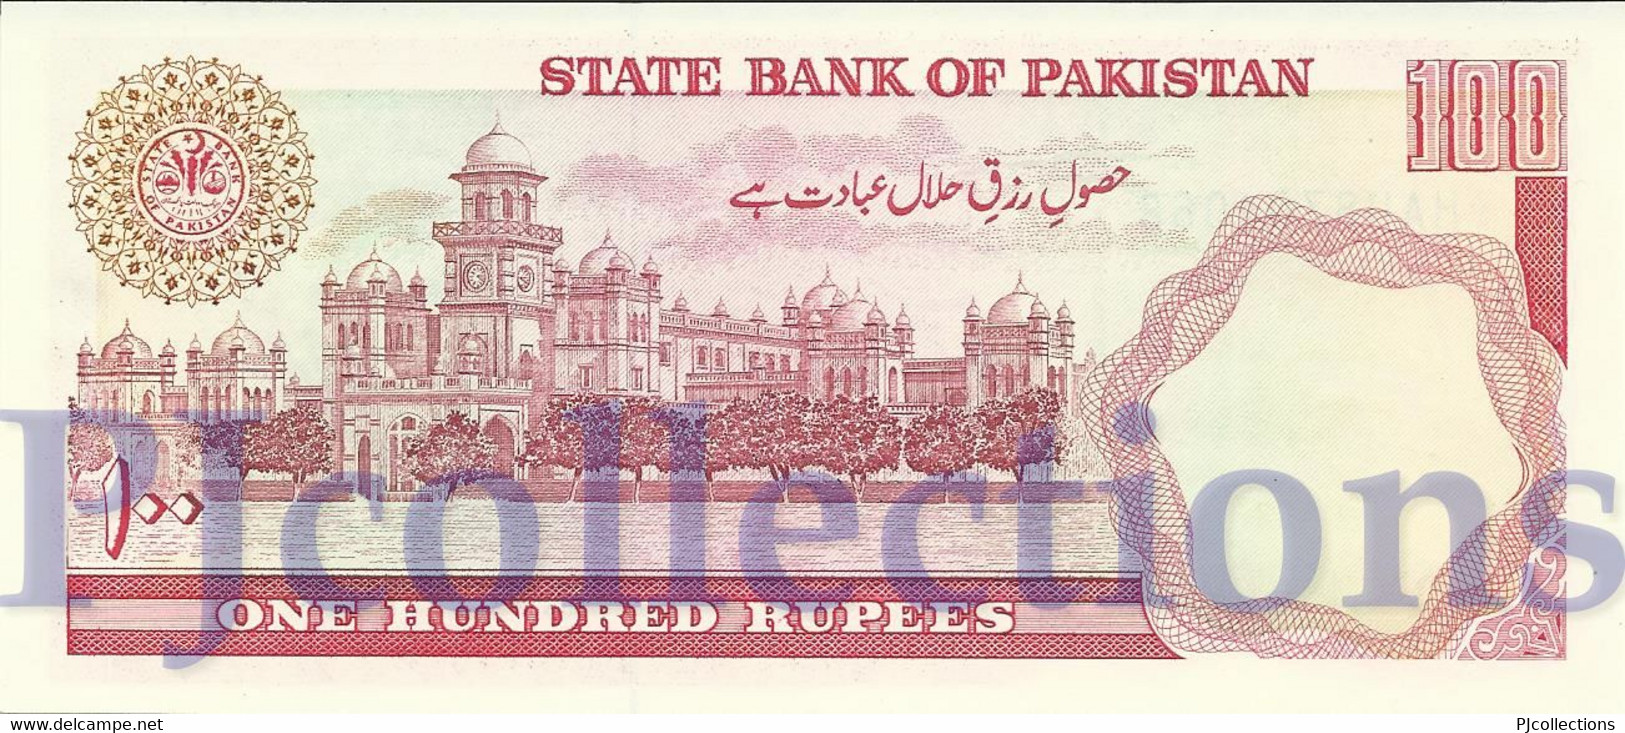 PAKISTAN 100 RUPEES 1986 PICK 41 UNC W/PINHOLES - Pakistan